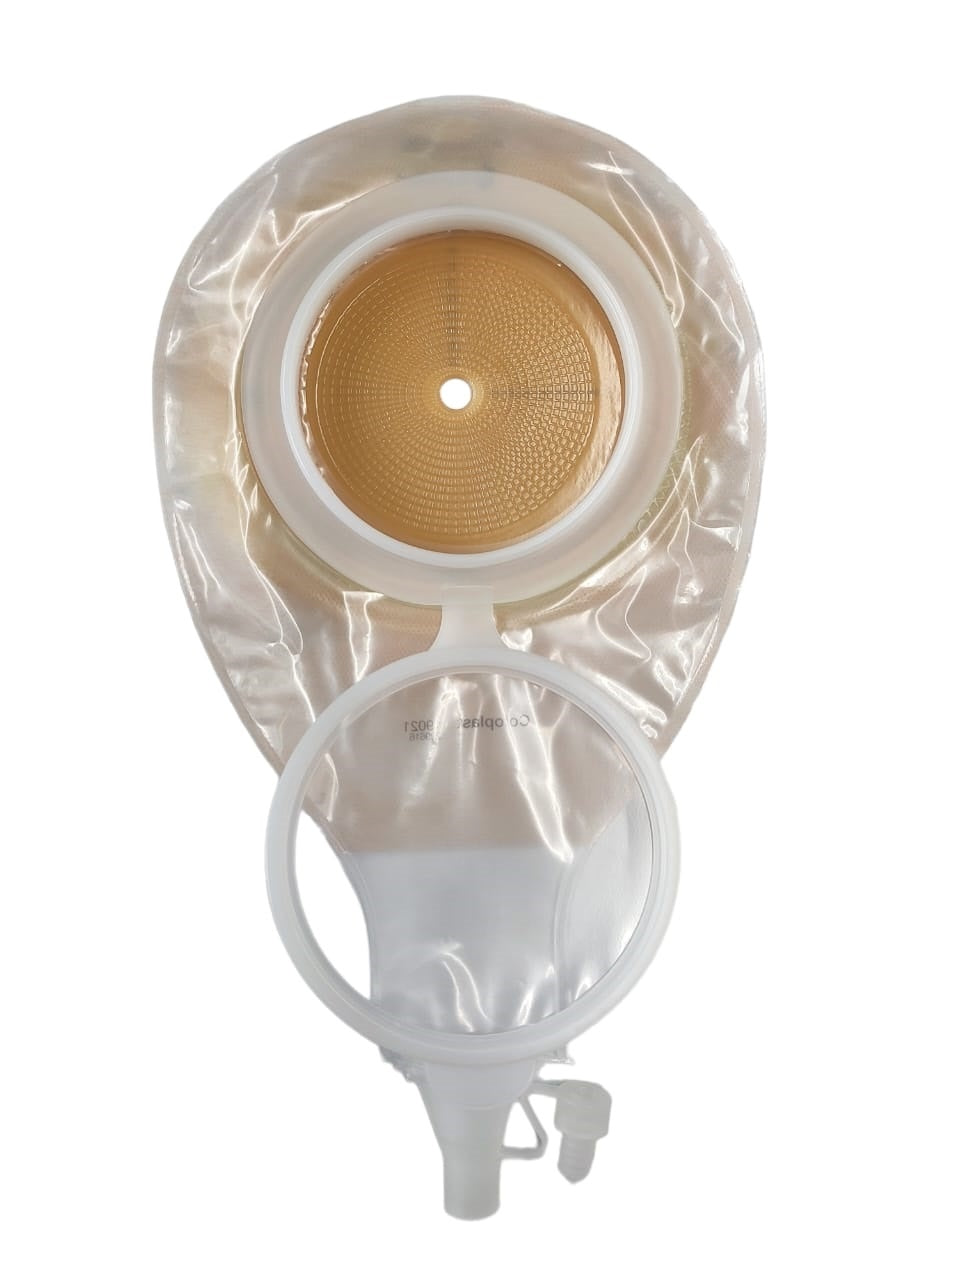 Coloplast Sensura Post-Op Ostomy Bag 1-Piece Open with Inspection Window 100mm (10-115mm) 19021